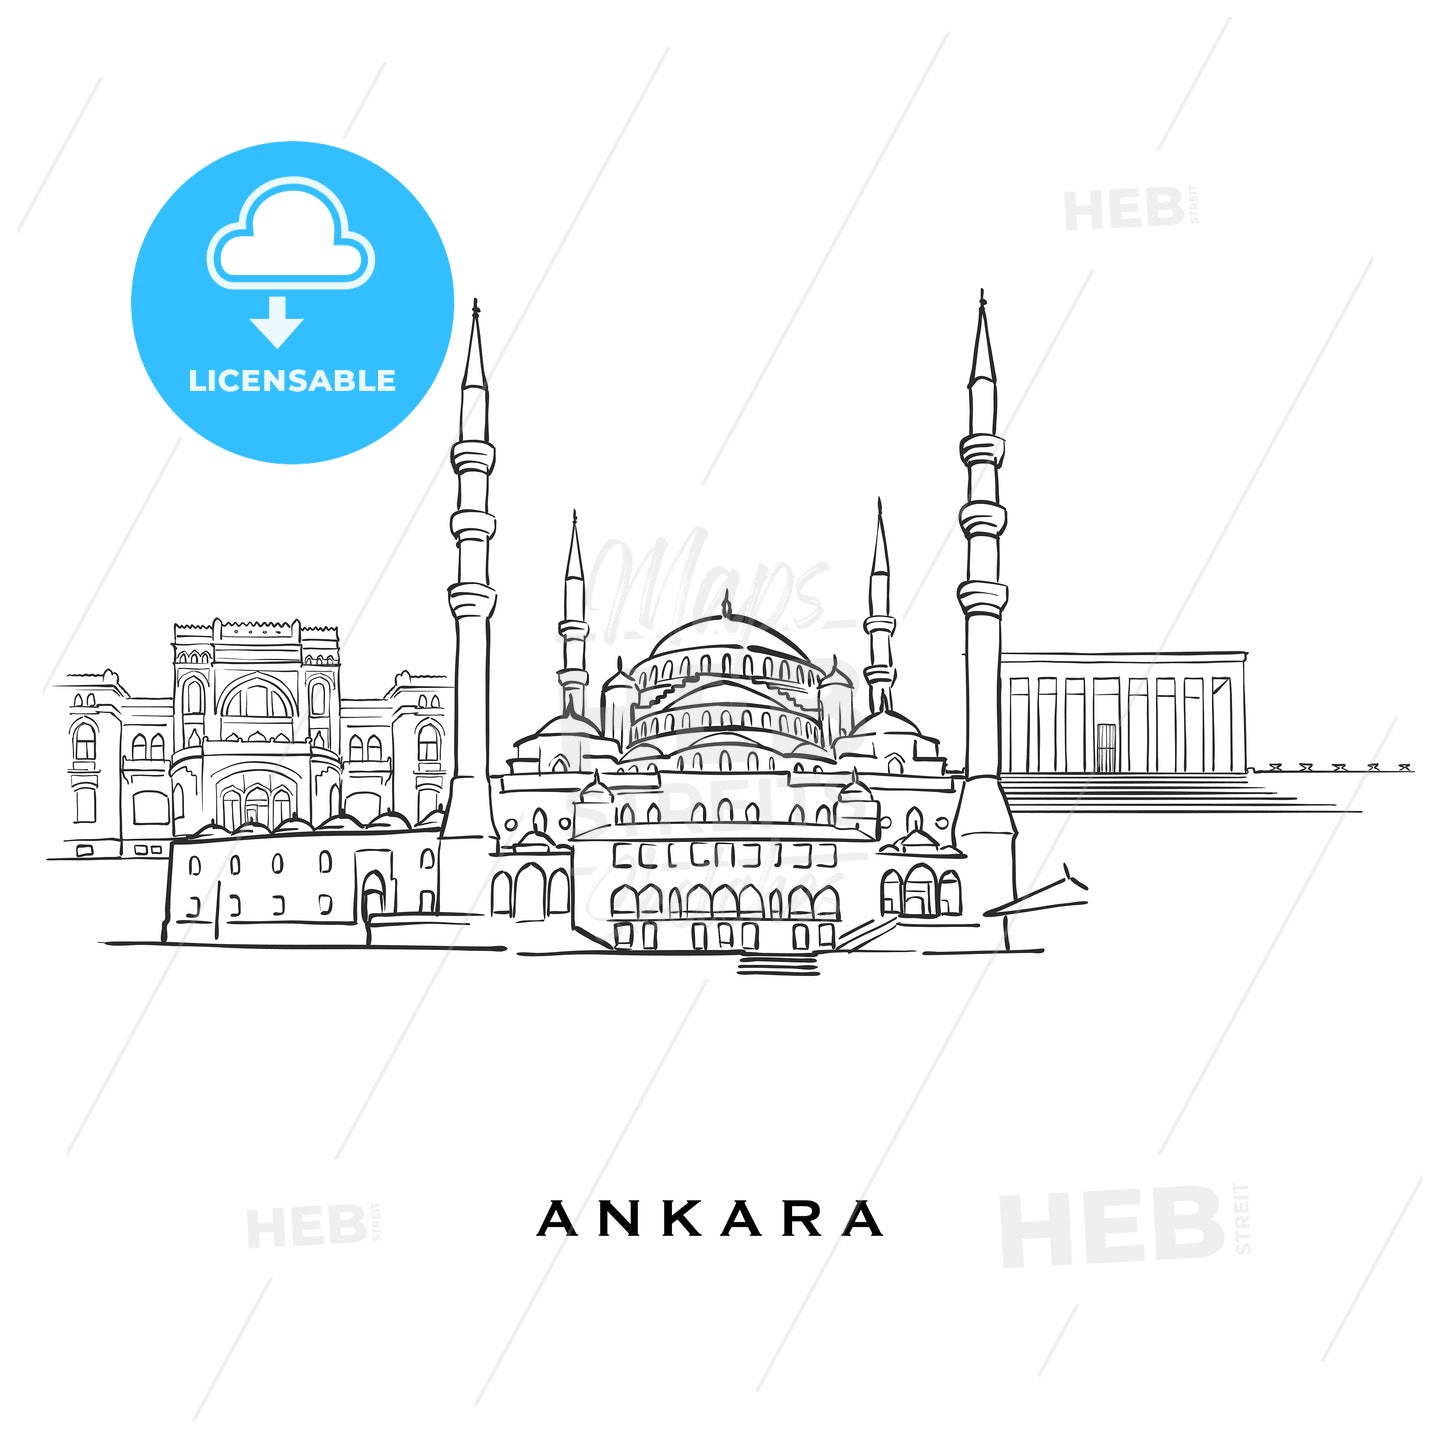 Ankara Turkey famous architecture – instant download